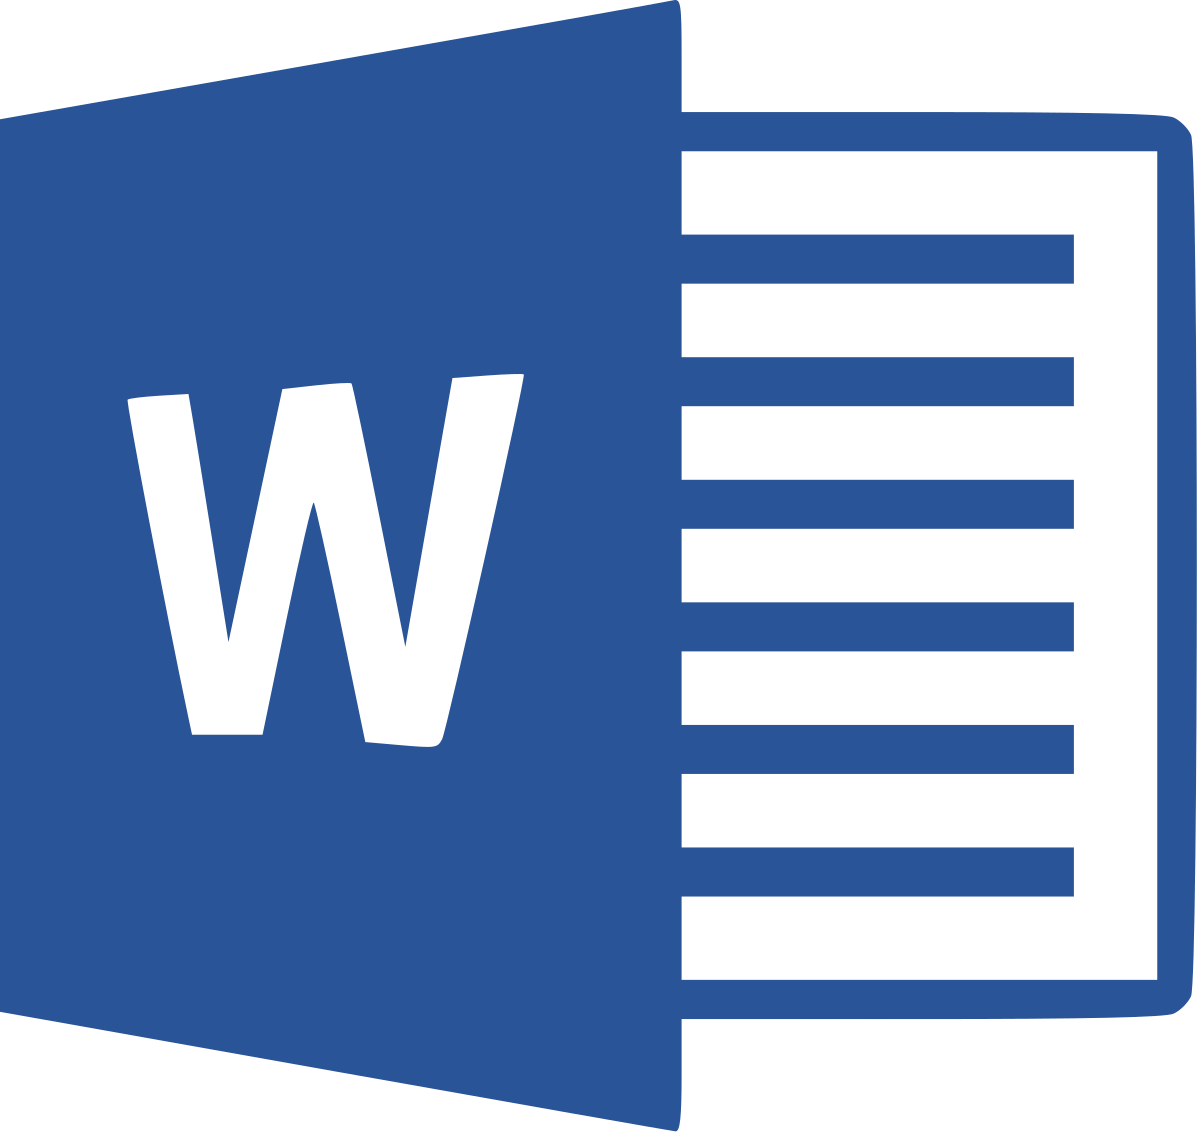 Microsoft Word 2010 Logo - Microsoft Word